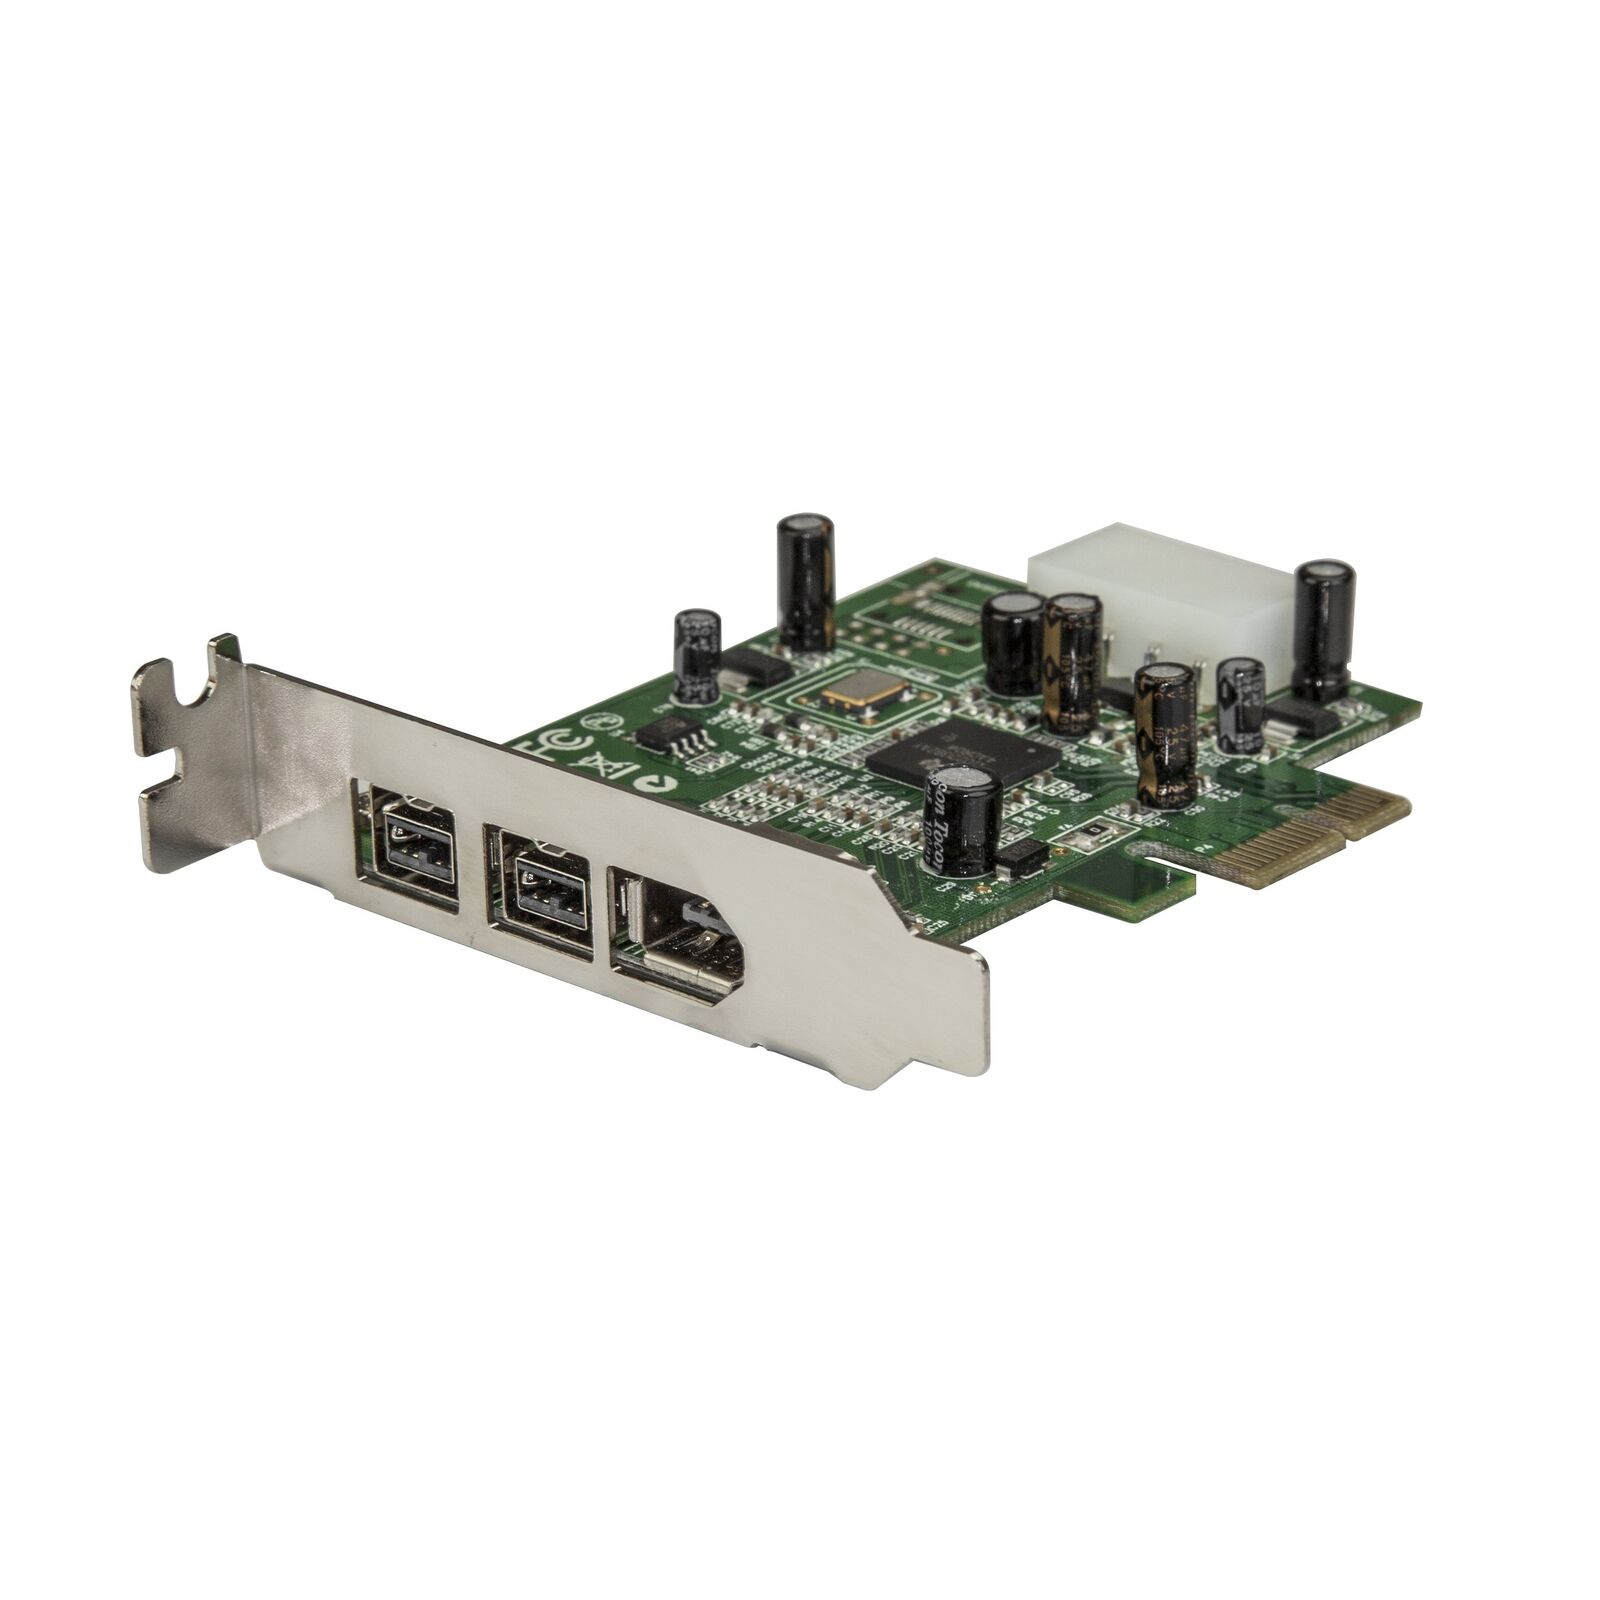 StarTech.com 3 Port 2b 1a Low Profile 1394 PCI Express FireWire Card Adapter - P